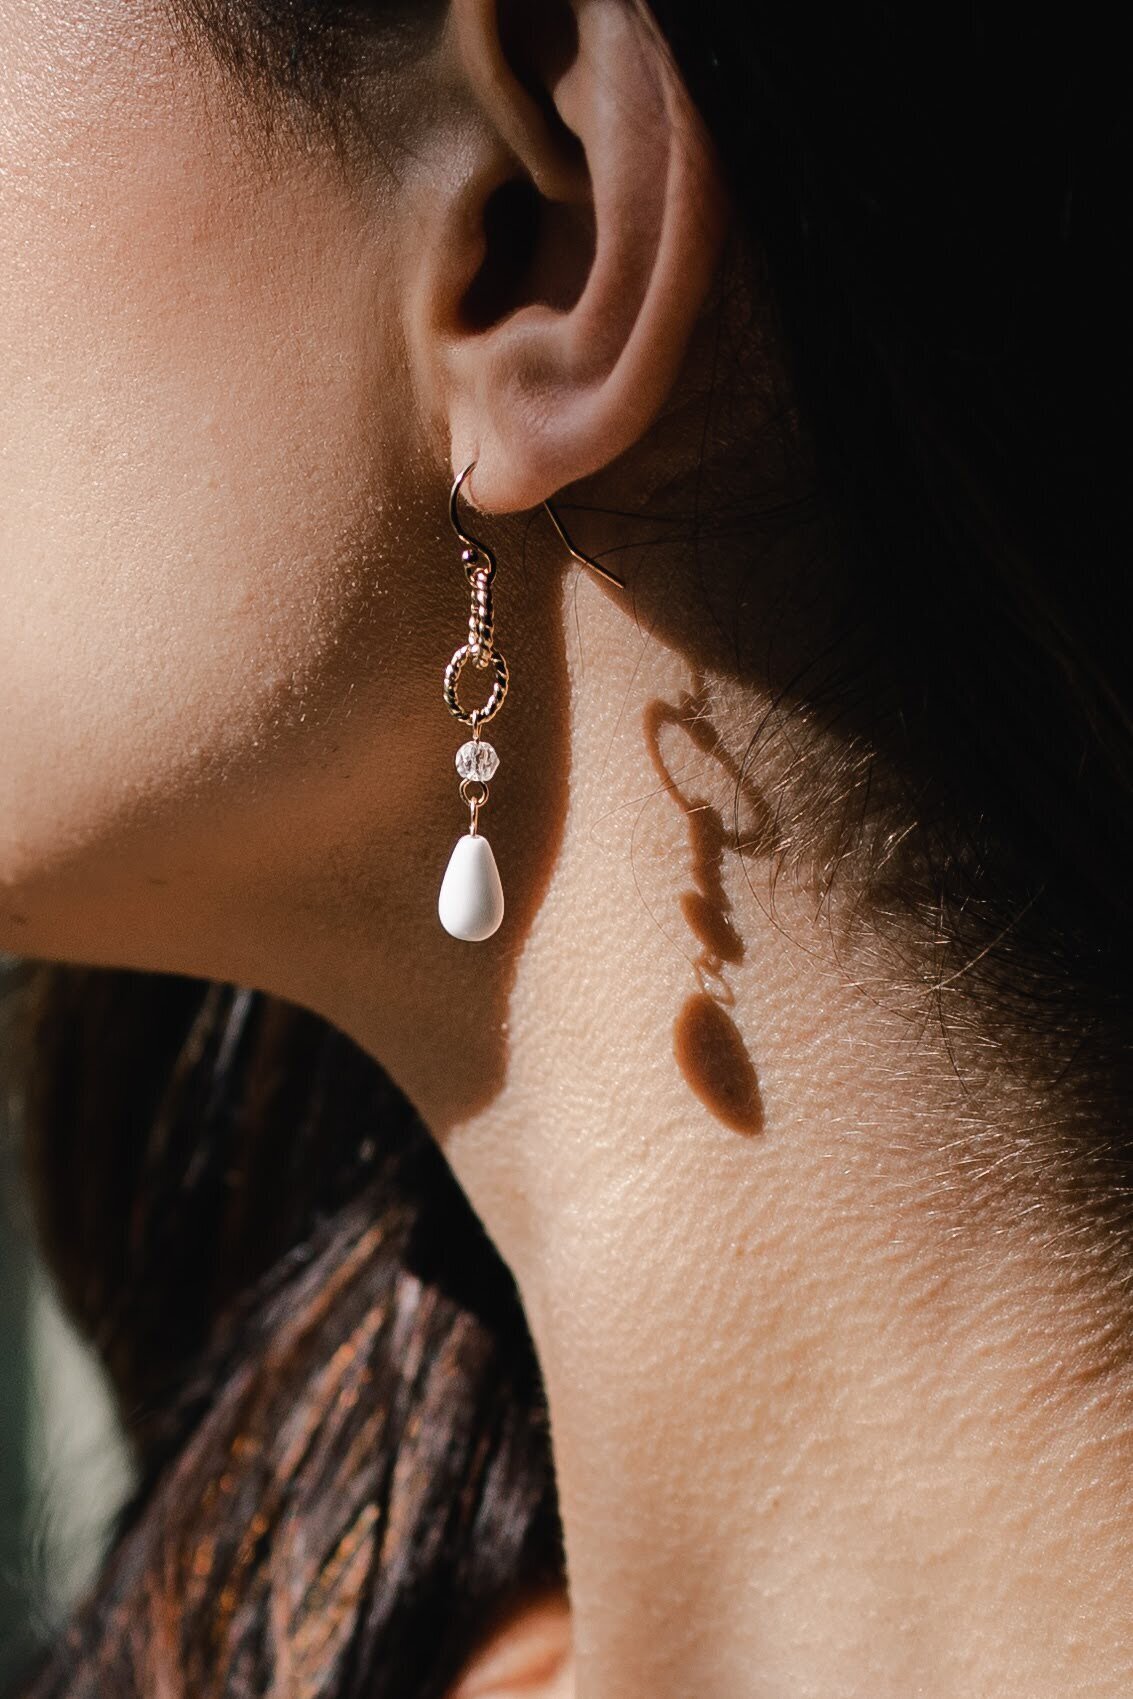 Elegant evening earrings by Mitraya jewelry handmade in Canada 